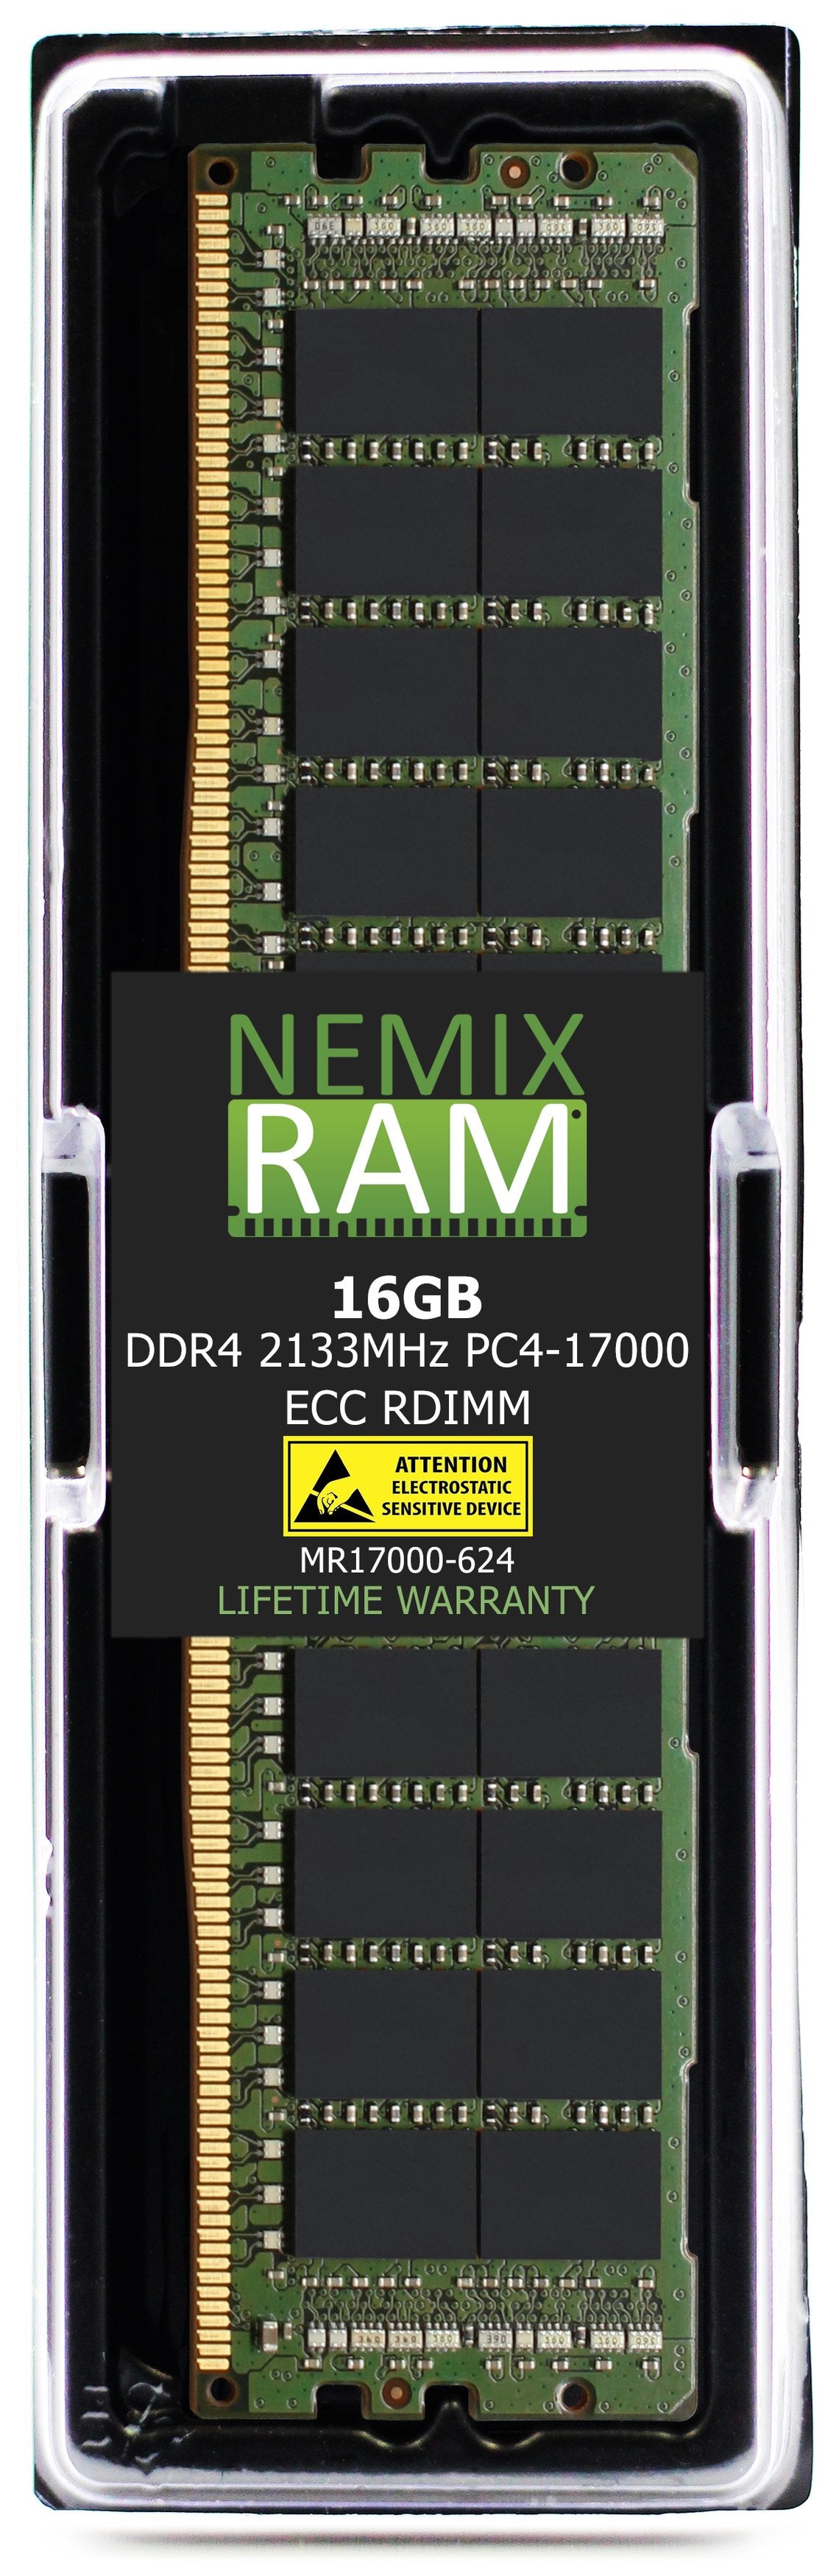 Hynix HMA42GR7BJR4N-TF 16GB DDR4 2133MHZ PC4-17000 RDIMM Compatible Memory Module